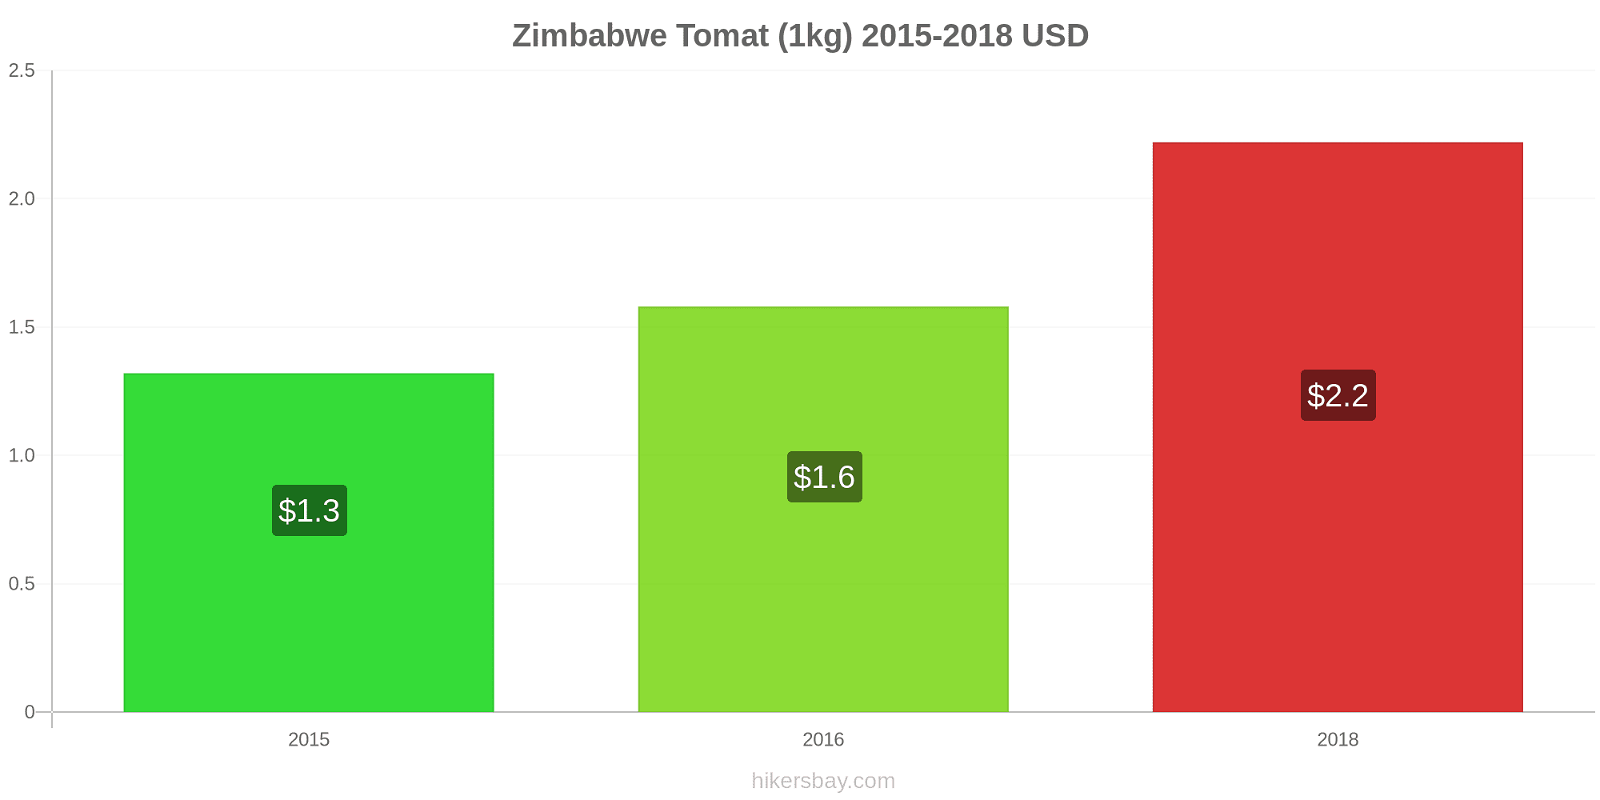 Zimbabwe perubahan harga Tomat (1kg) hikersbay.com